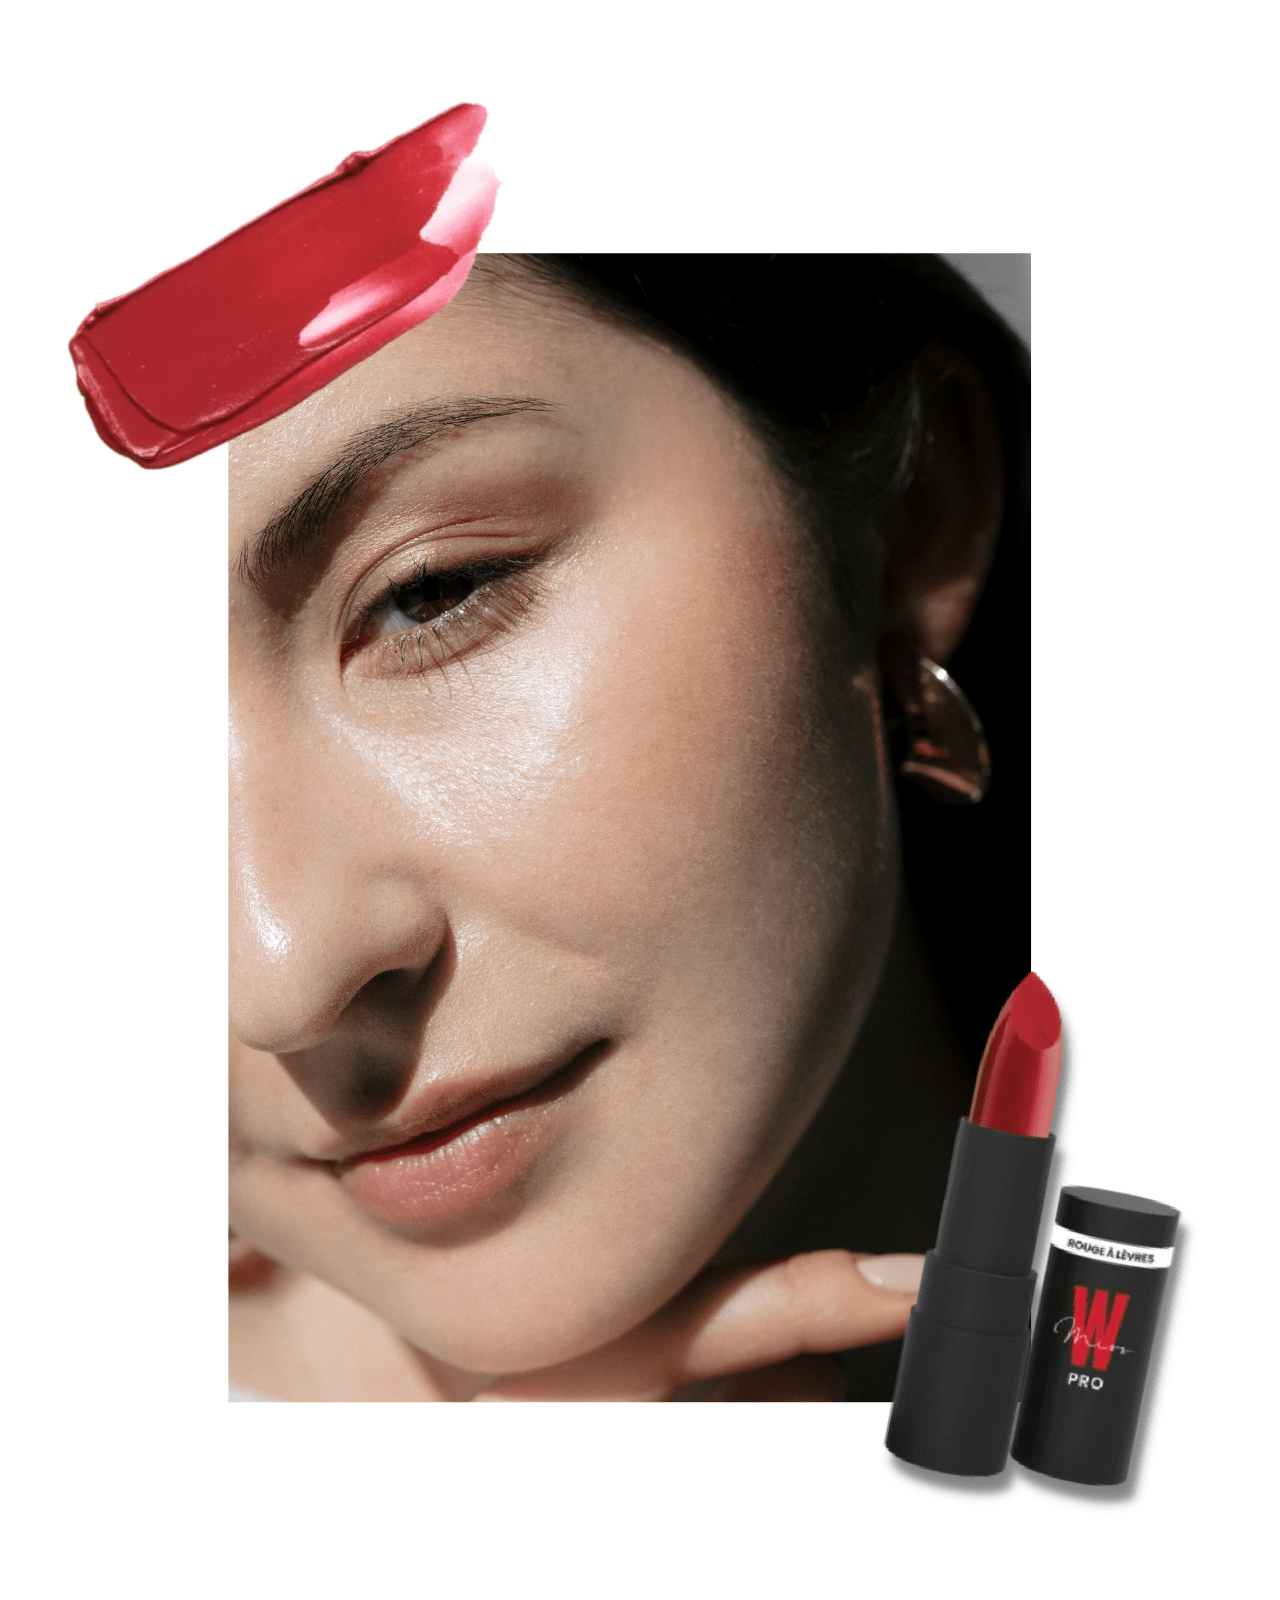 Pigmenty v clean make-up produktech